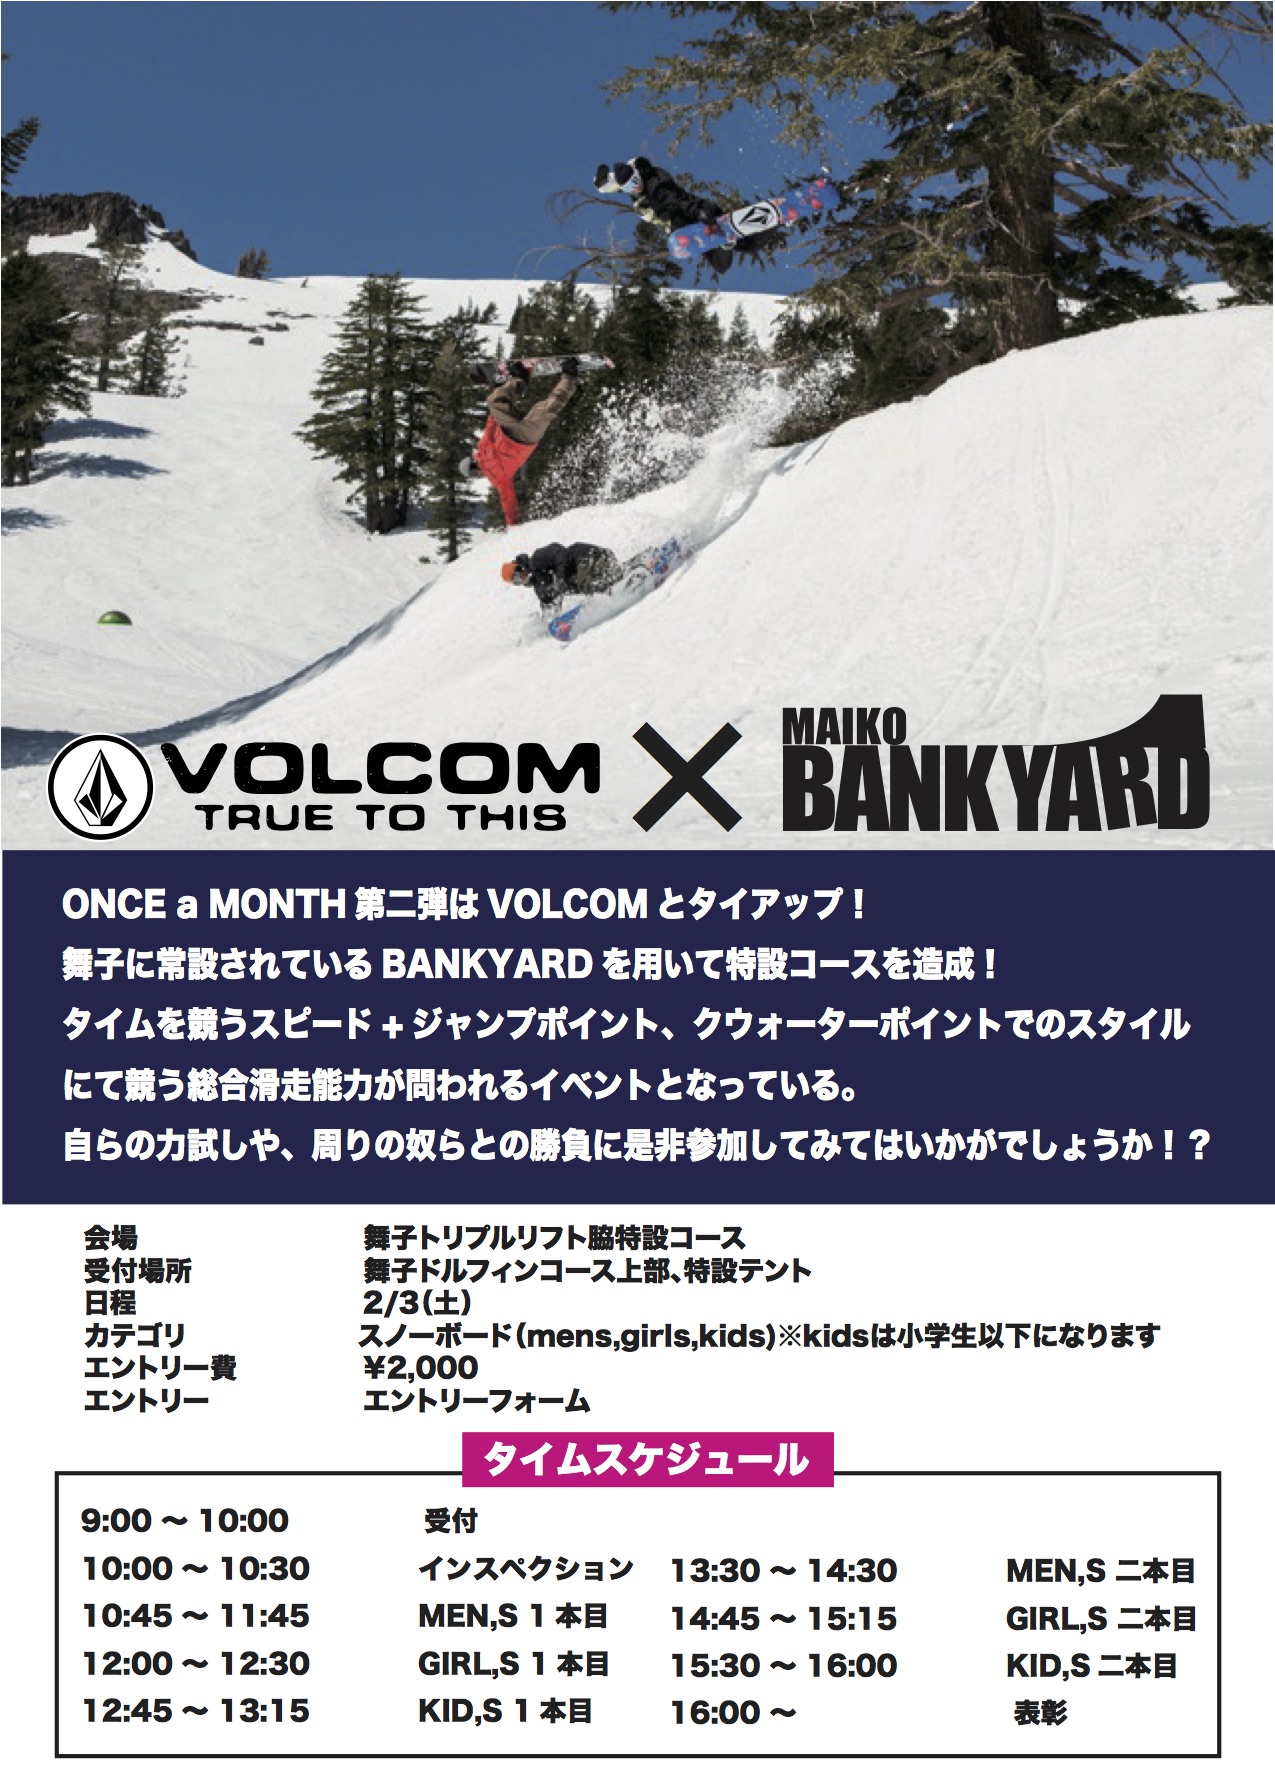 VOLCOM event advertising